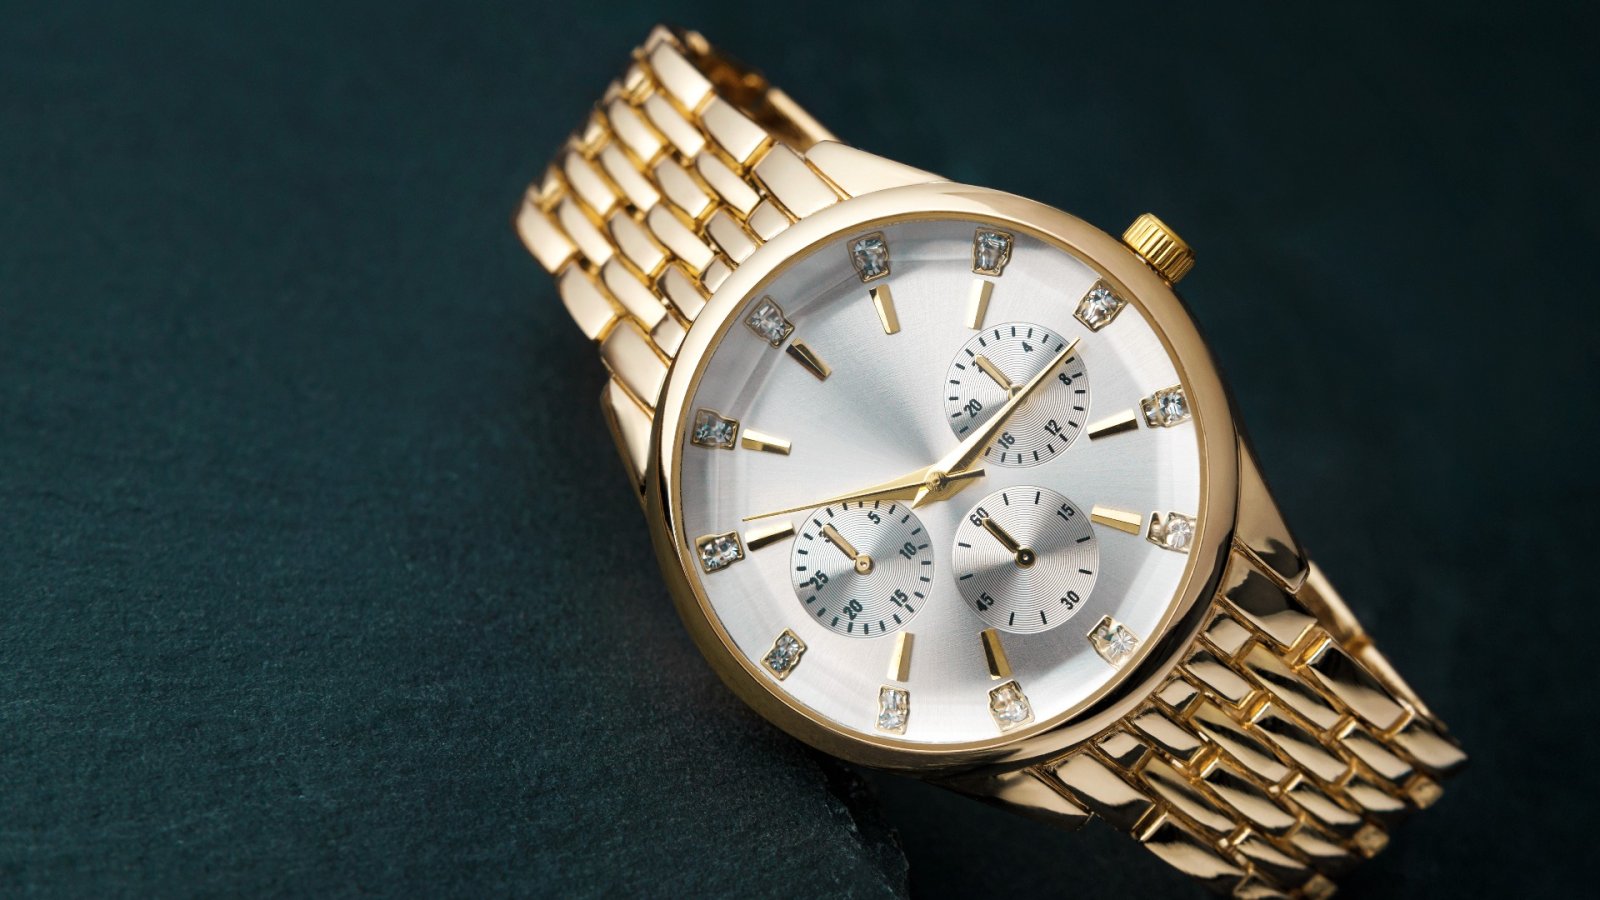 Trend alert - the new Ralph Lauren watch is a must-have timepiece